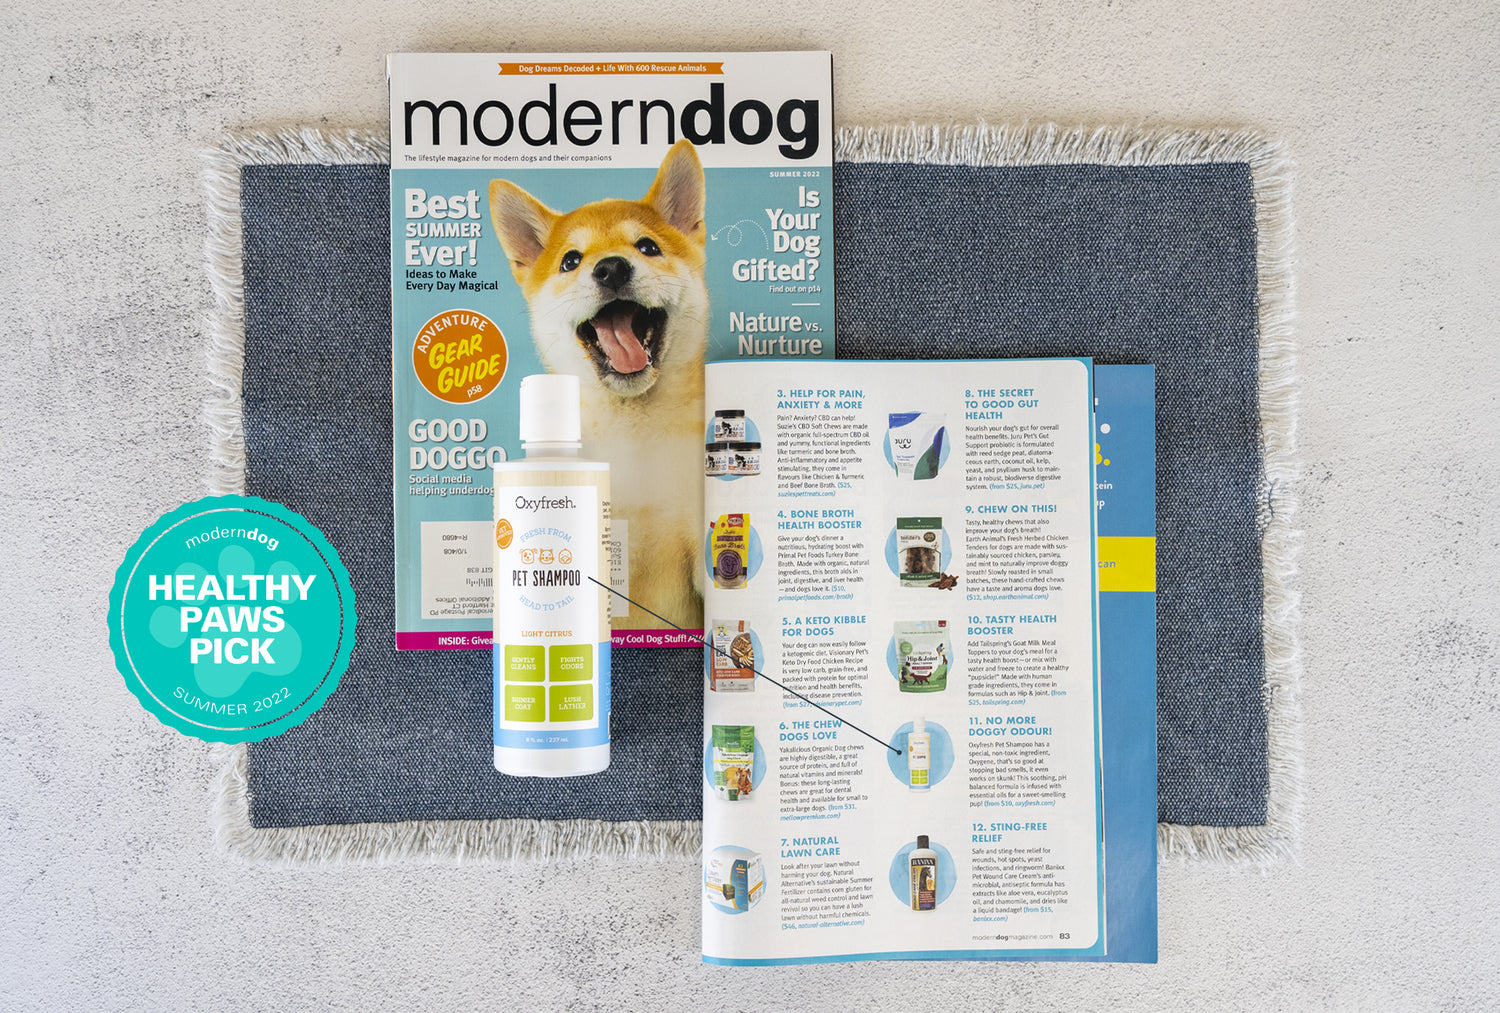 oxyfresh pet shampoo next to moderndog "Healthy Paws Pick" article